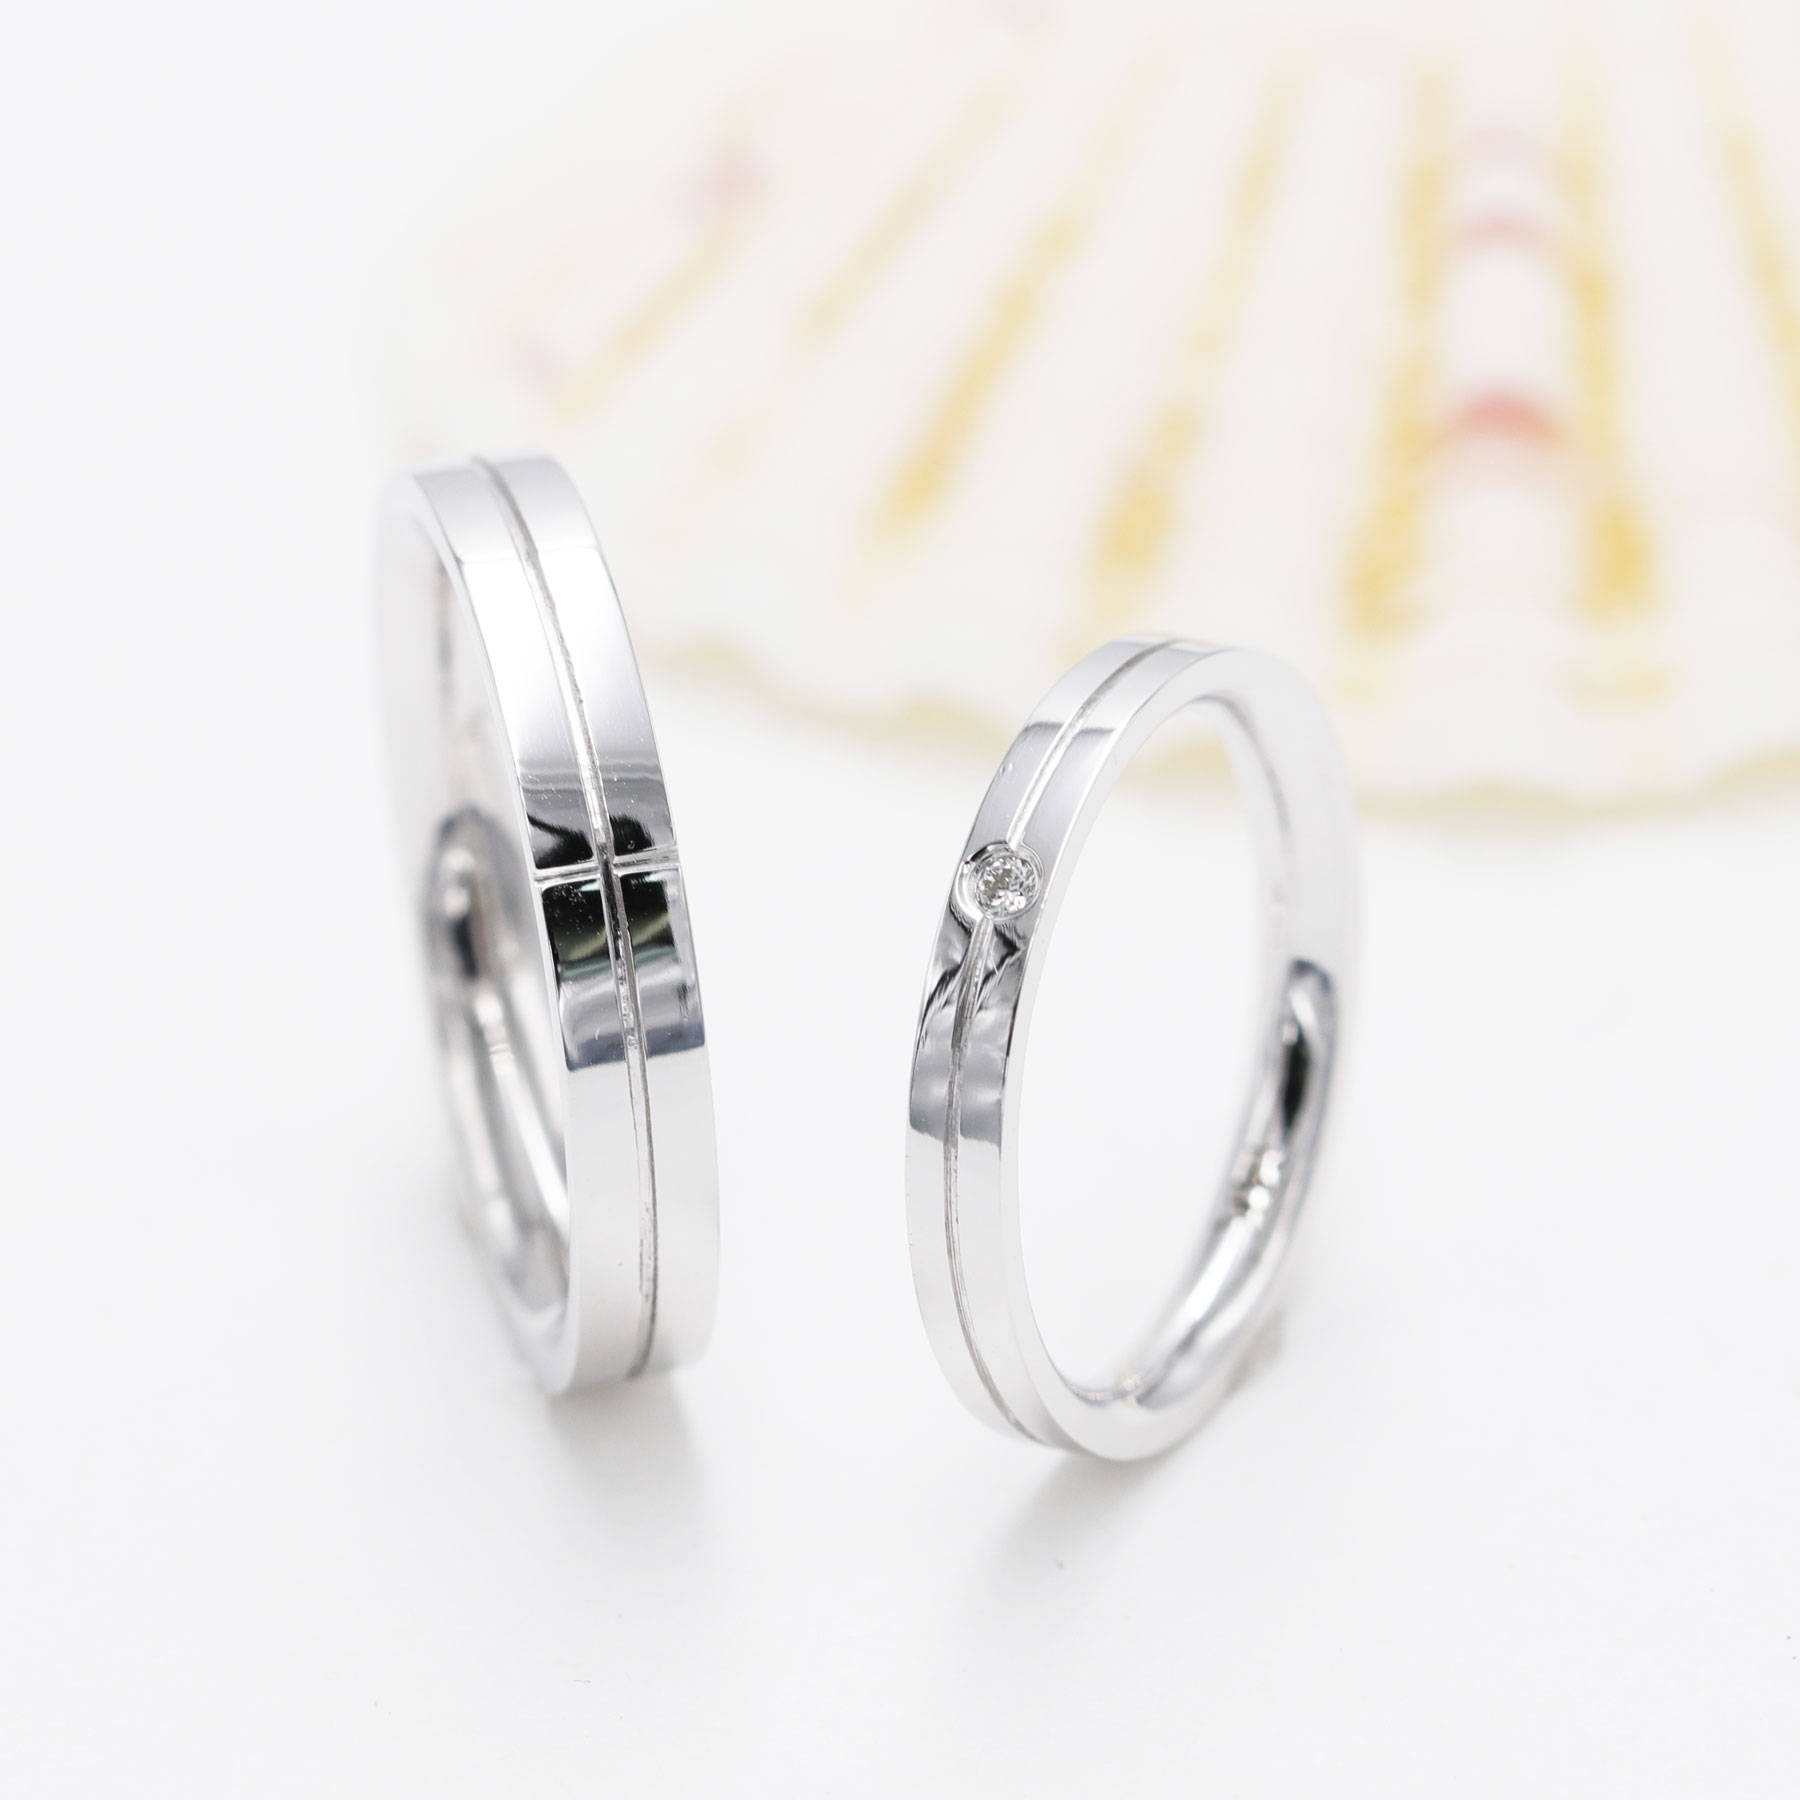 Geometric Triangle Sterling Silver Rings Jewelry - Eleganzia Jewelry